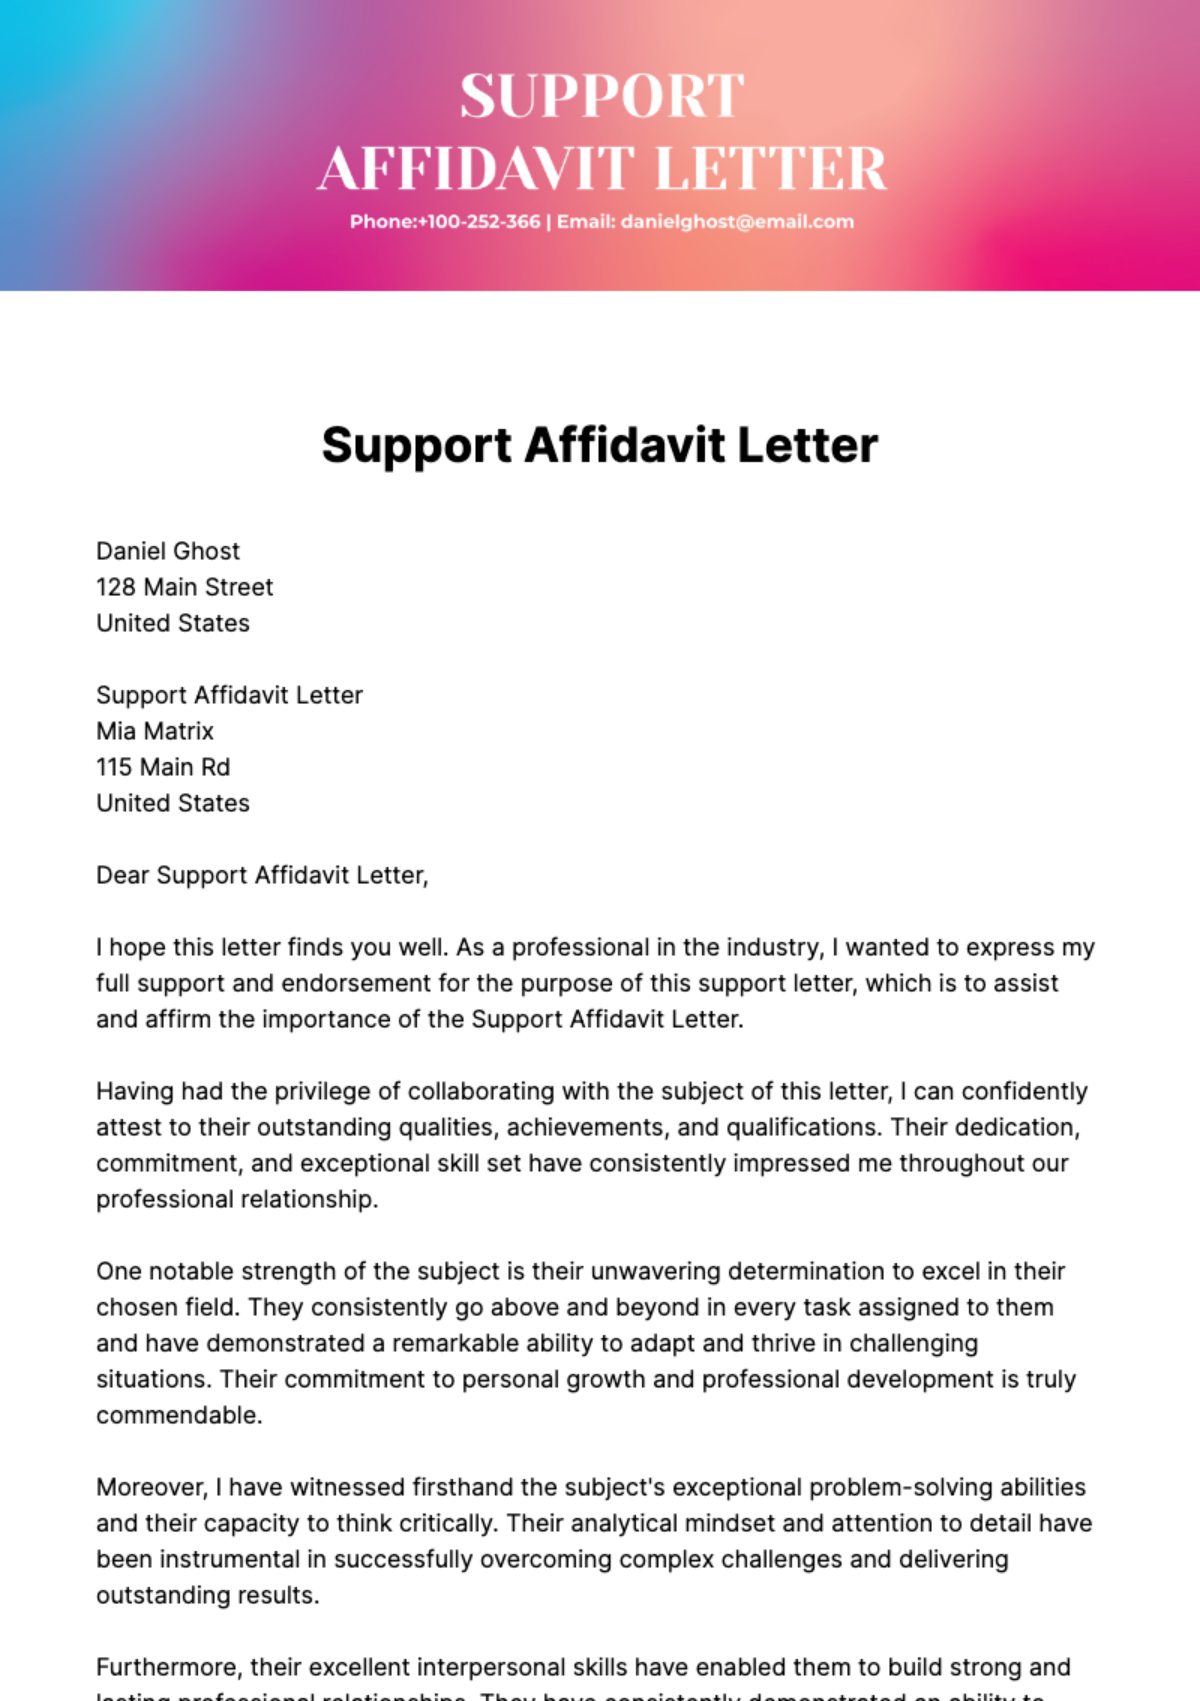 Support Affidavit Letter Template